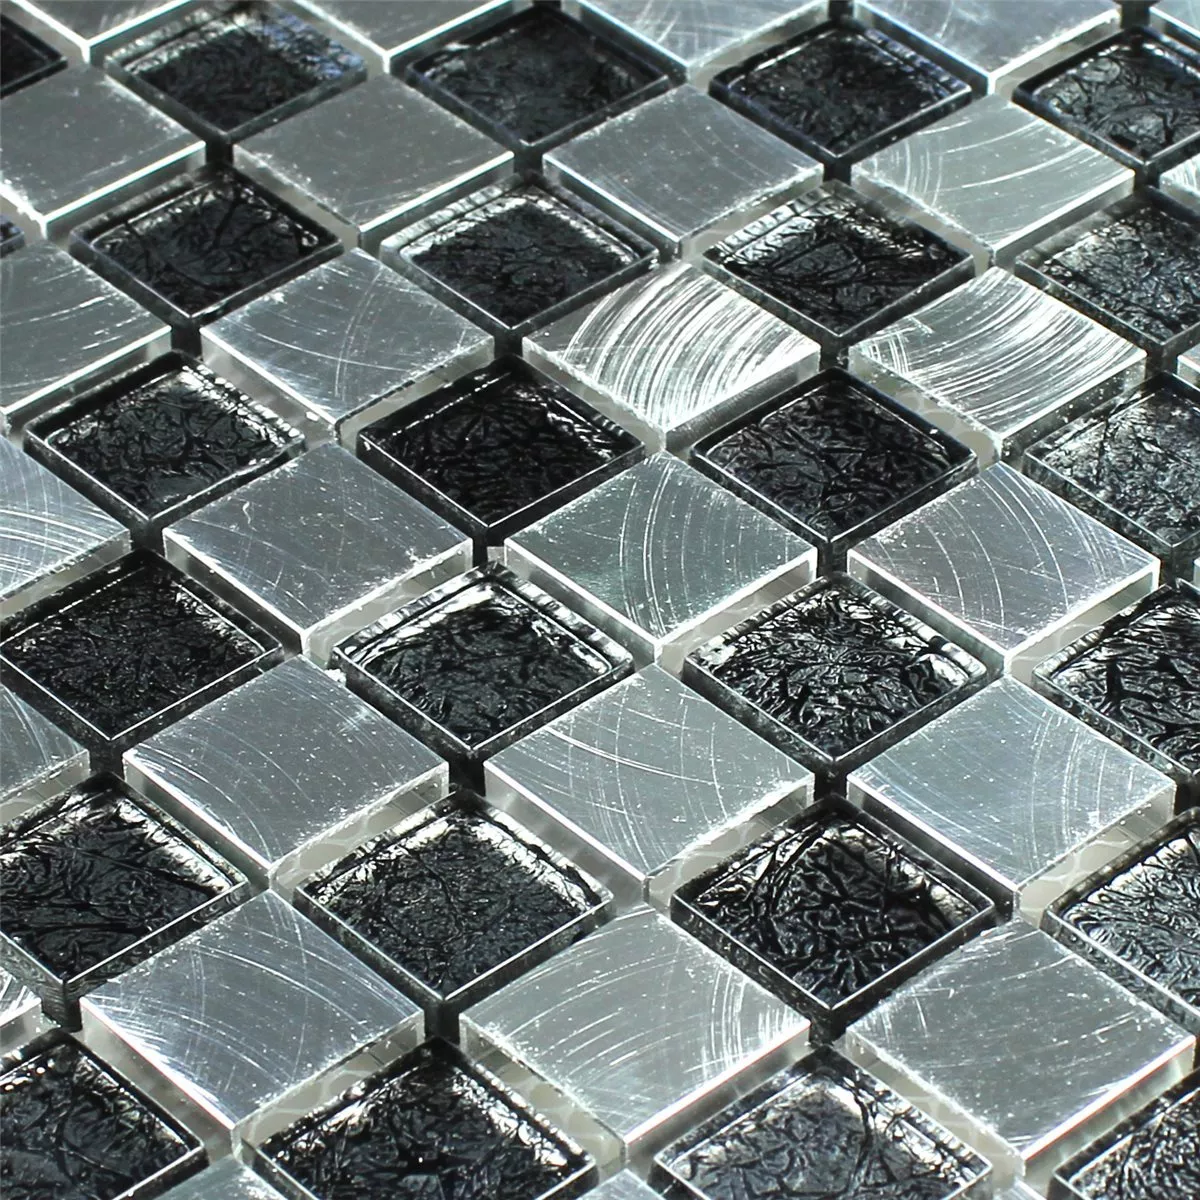 Sample Mosaic Tiles Metal Glass Chess Board 